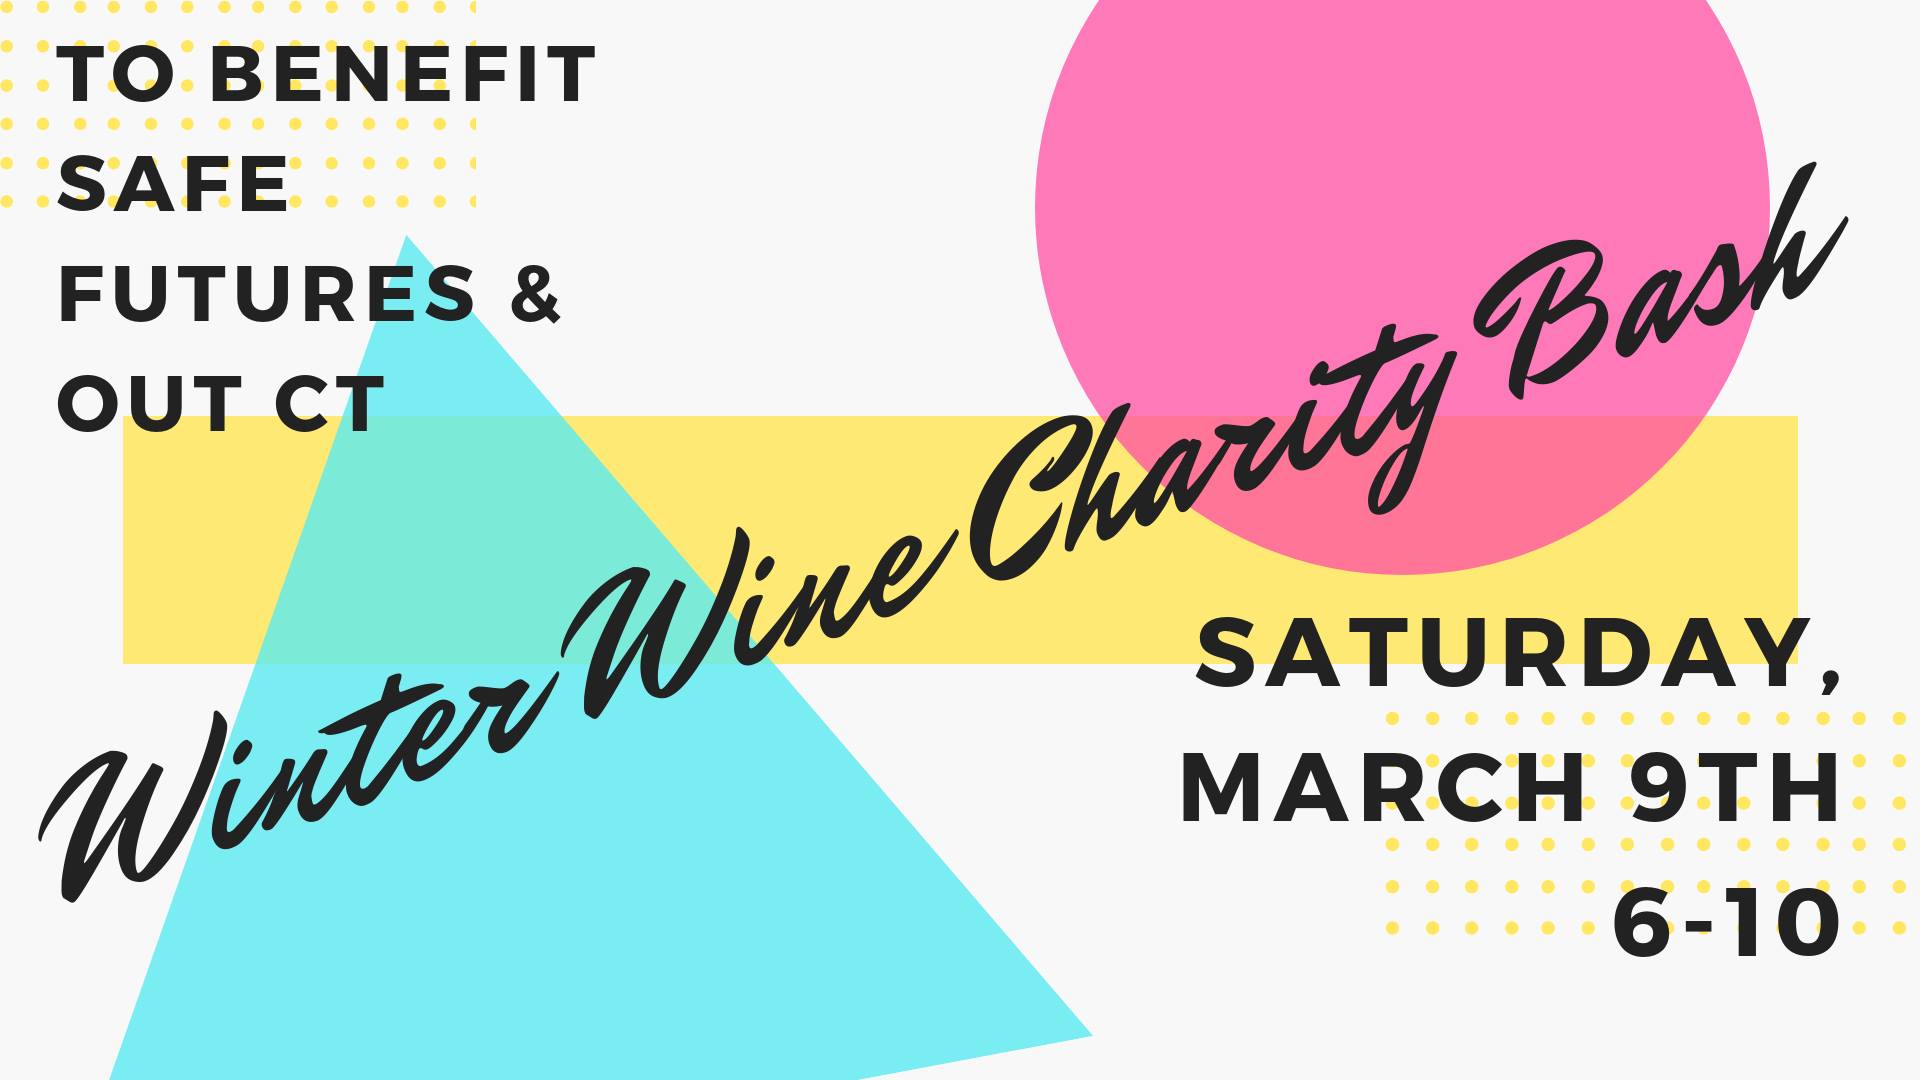 Winter Wine Charity Bash @ Stonington Vineyards